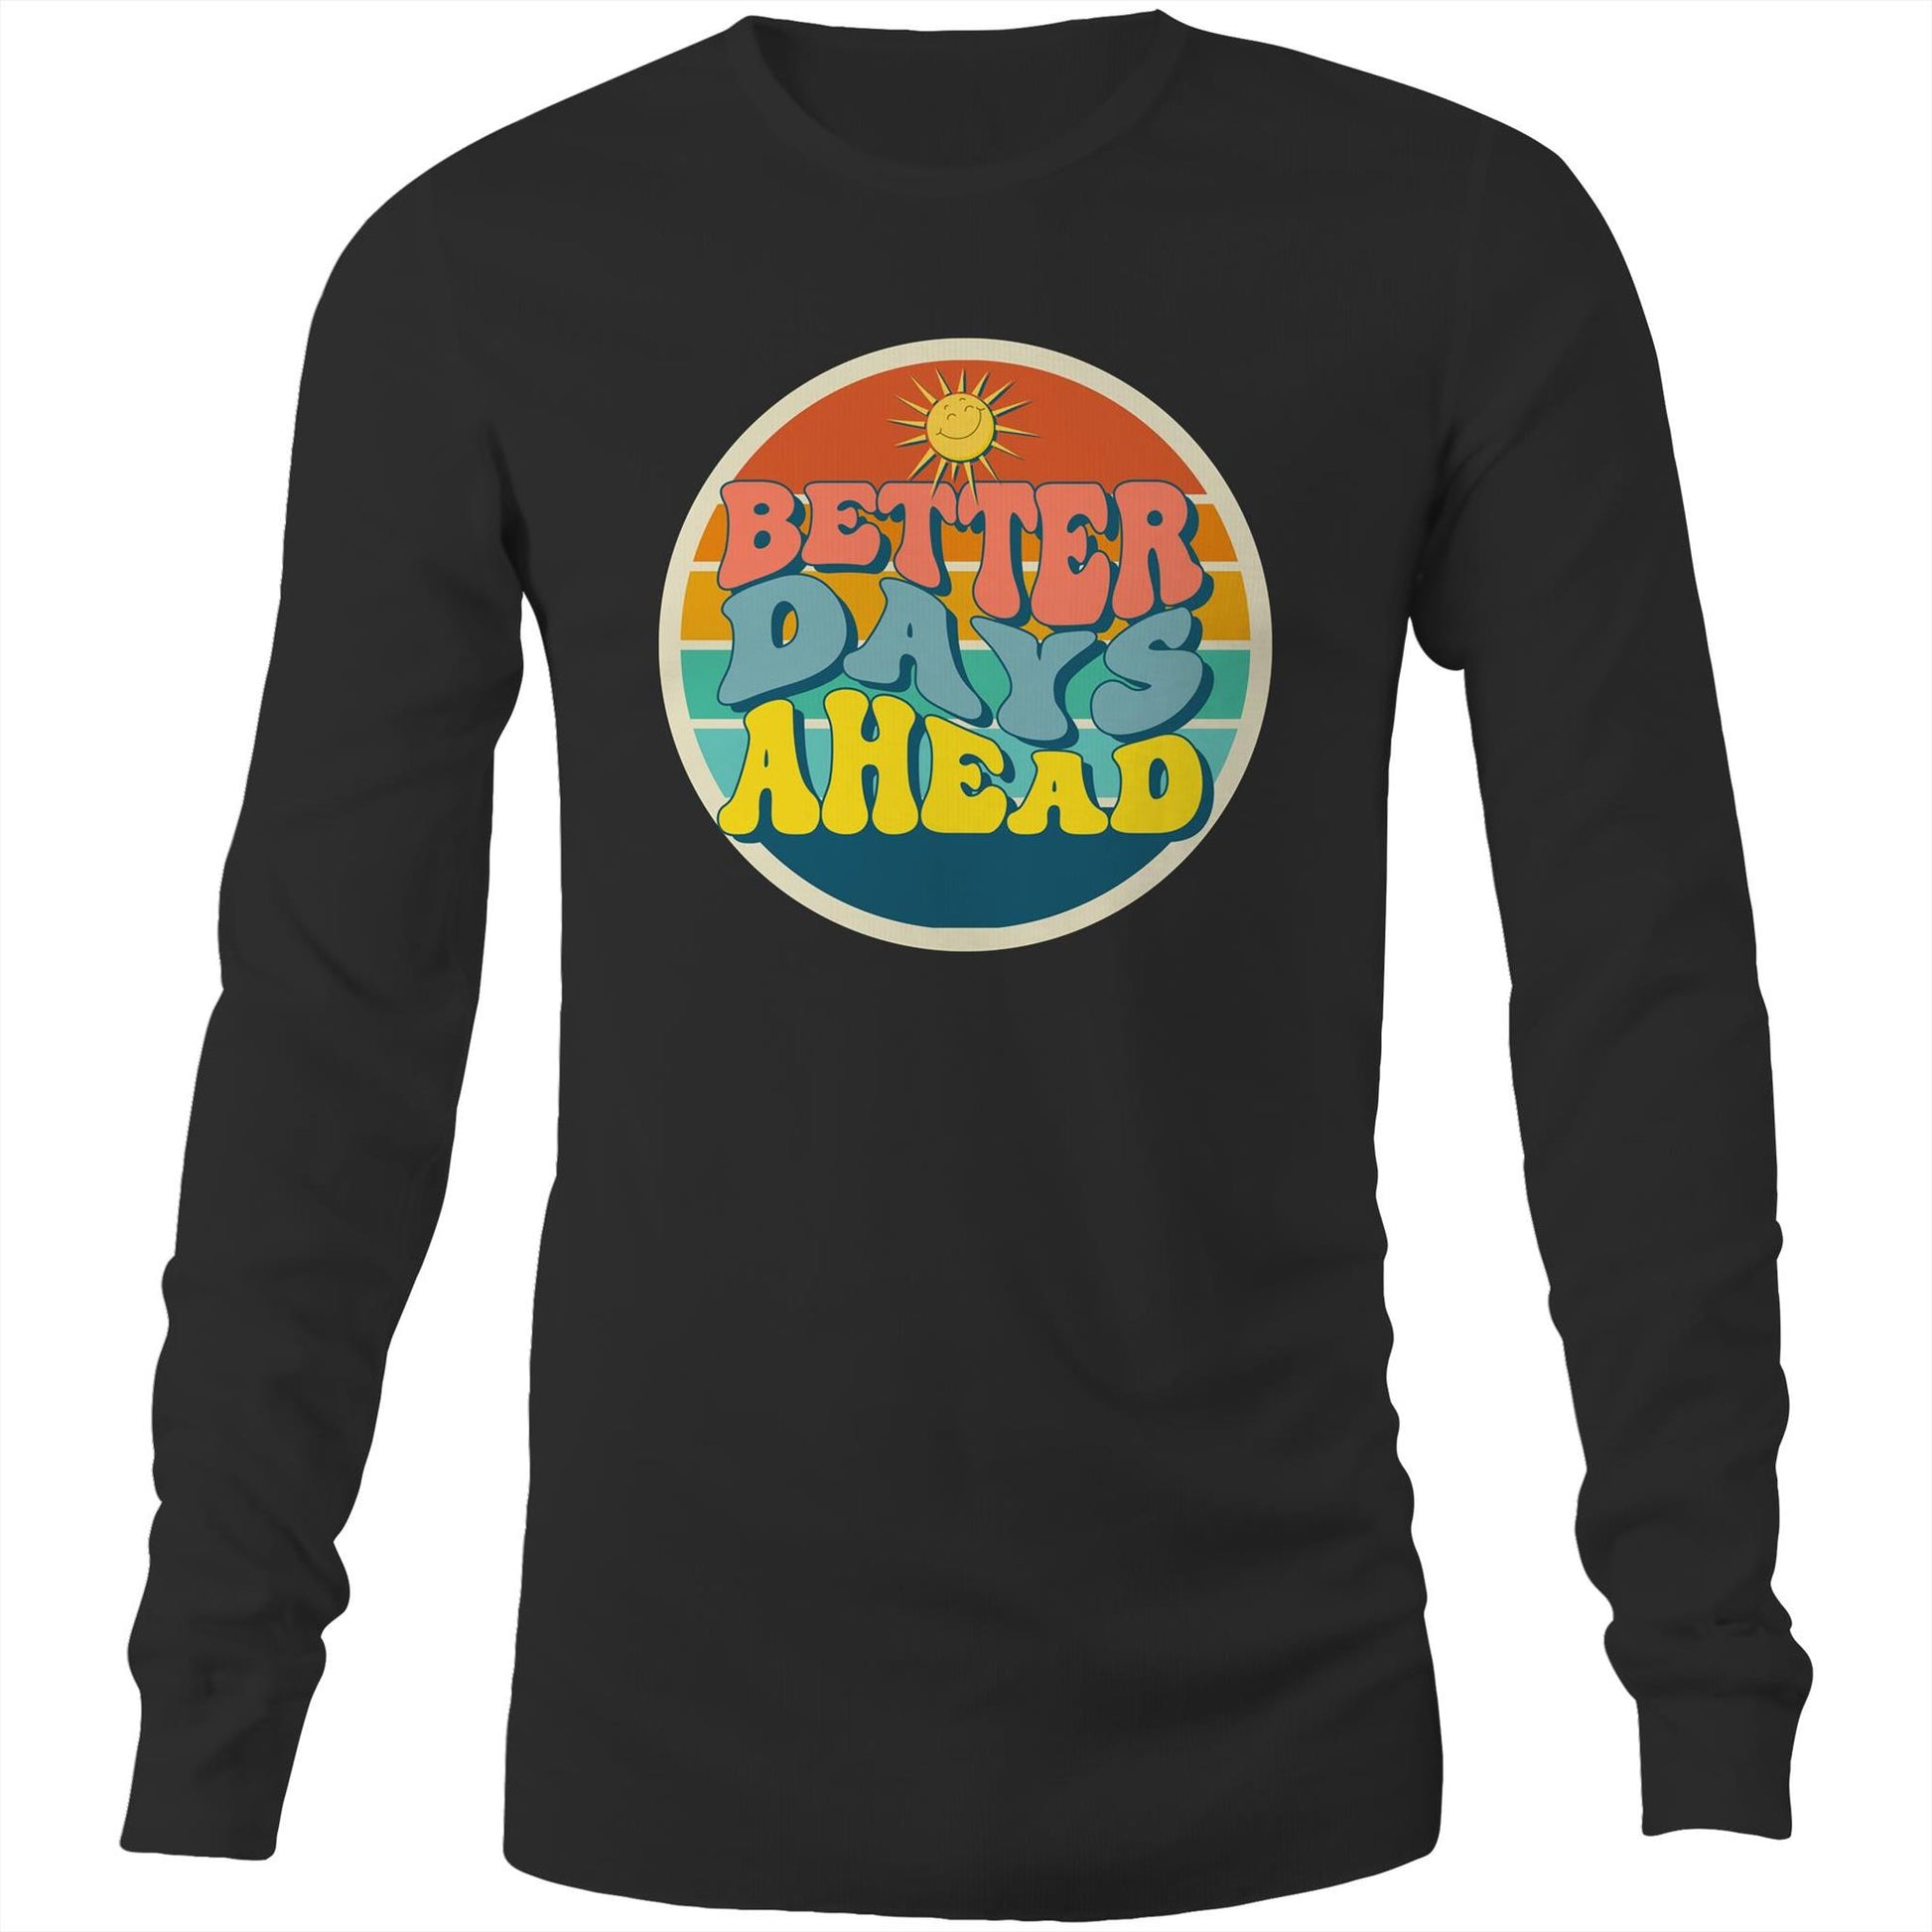 Better Days Ahead - Long Sleeve T-Shirt Black Unisex Long Sleeve T-shirt Motivation Retro